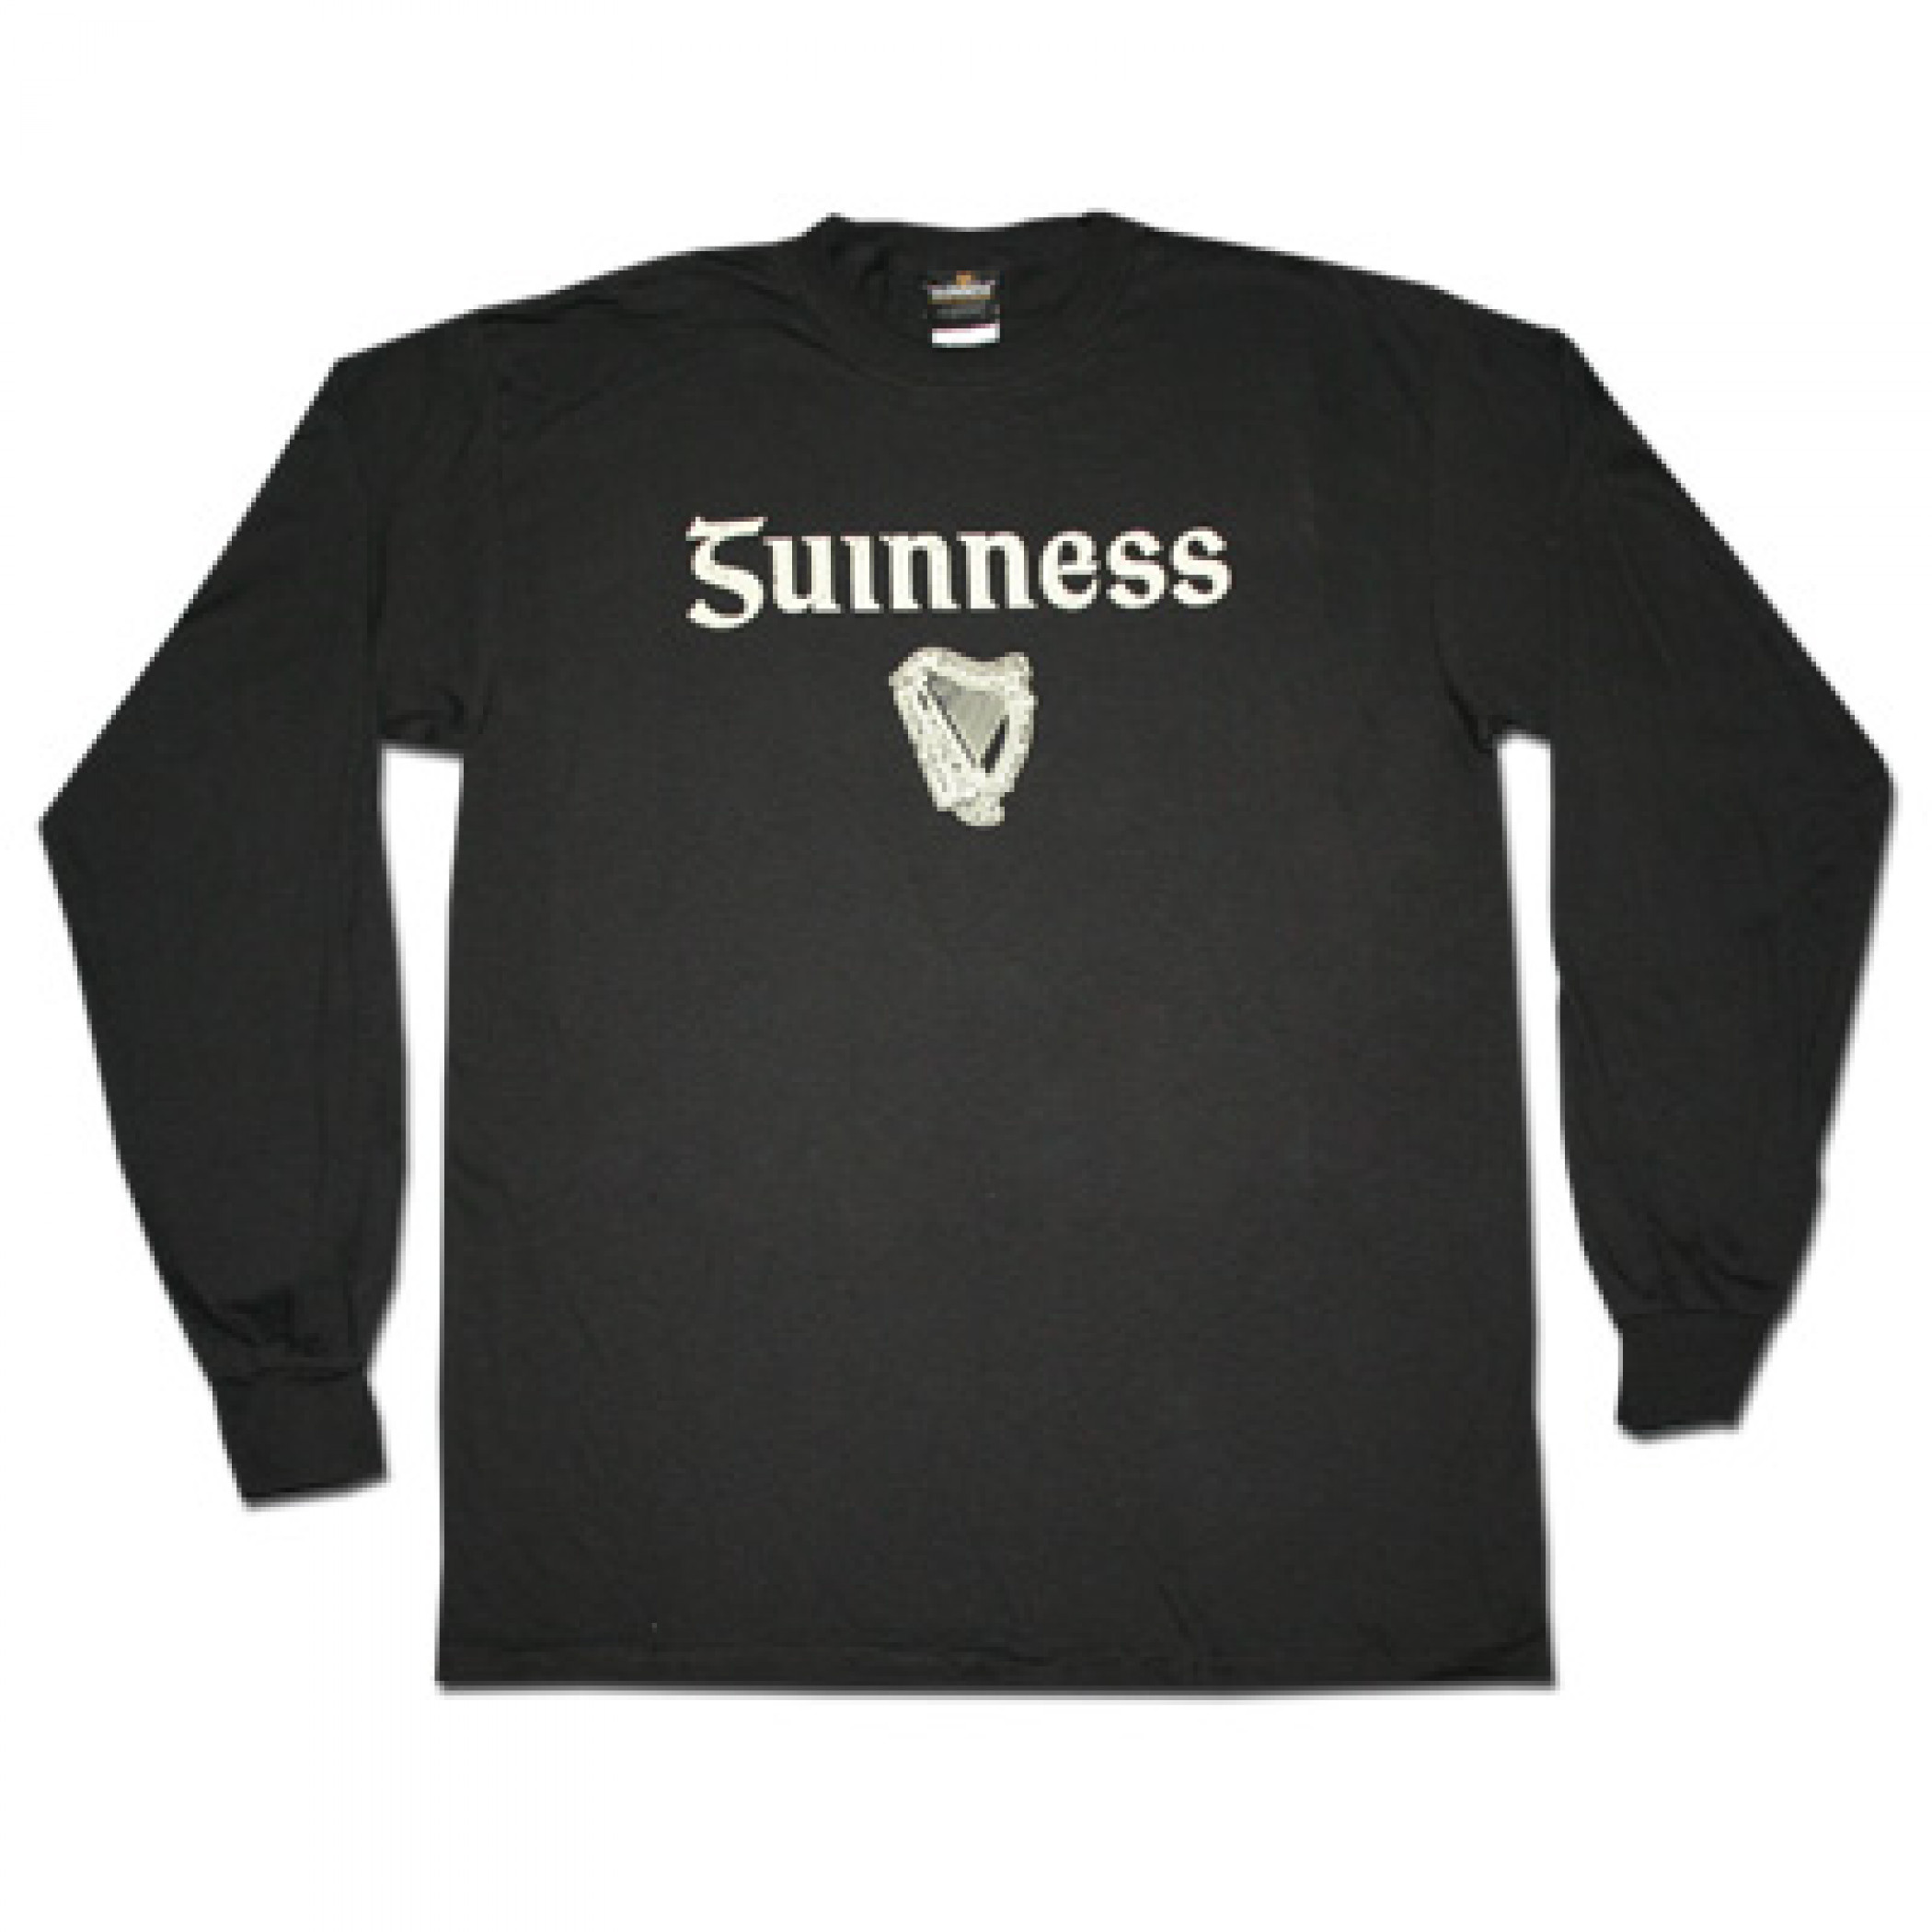 Guinness Gaelic Label Long Sleeve Black Graphic Tee Shirt